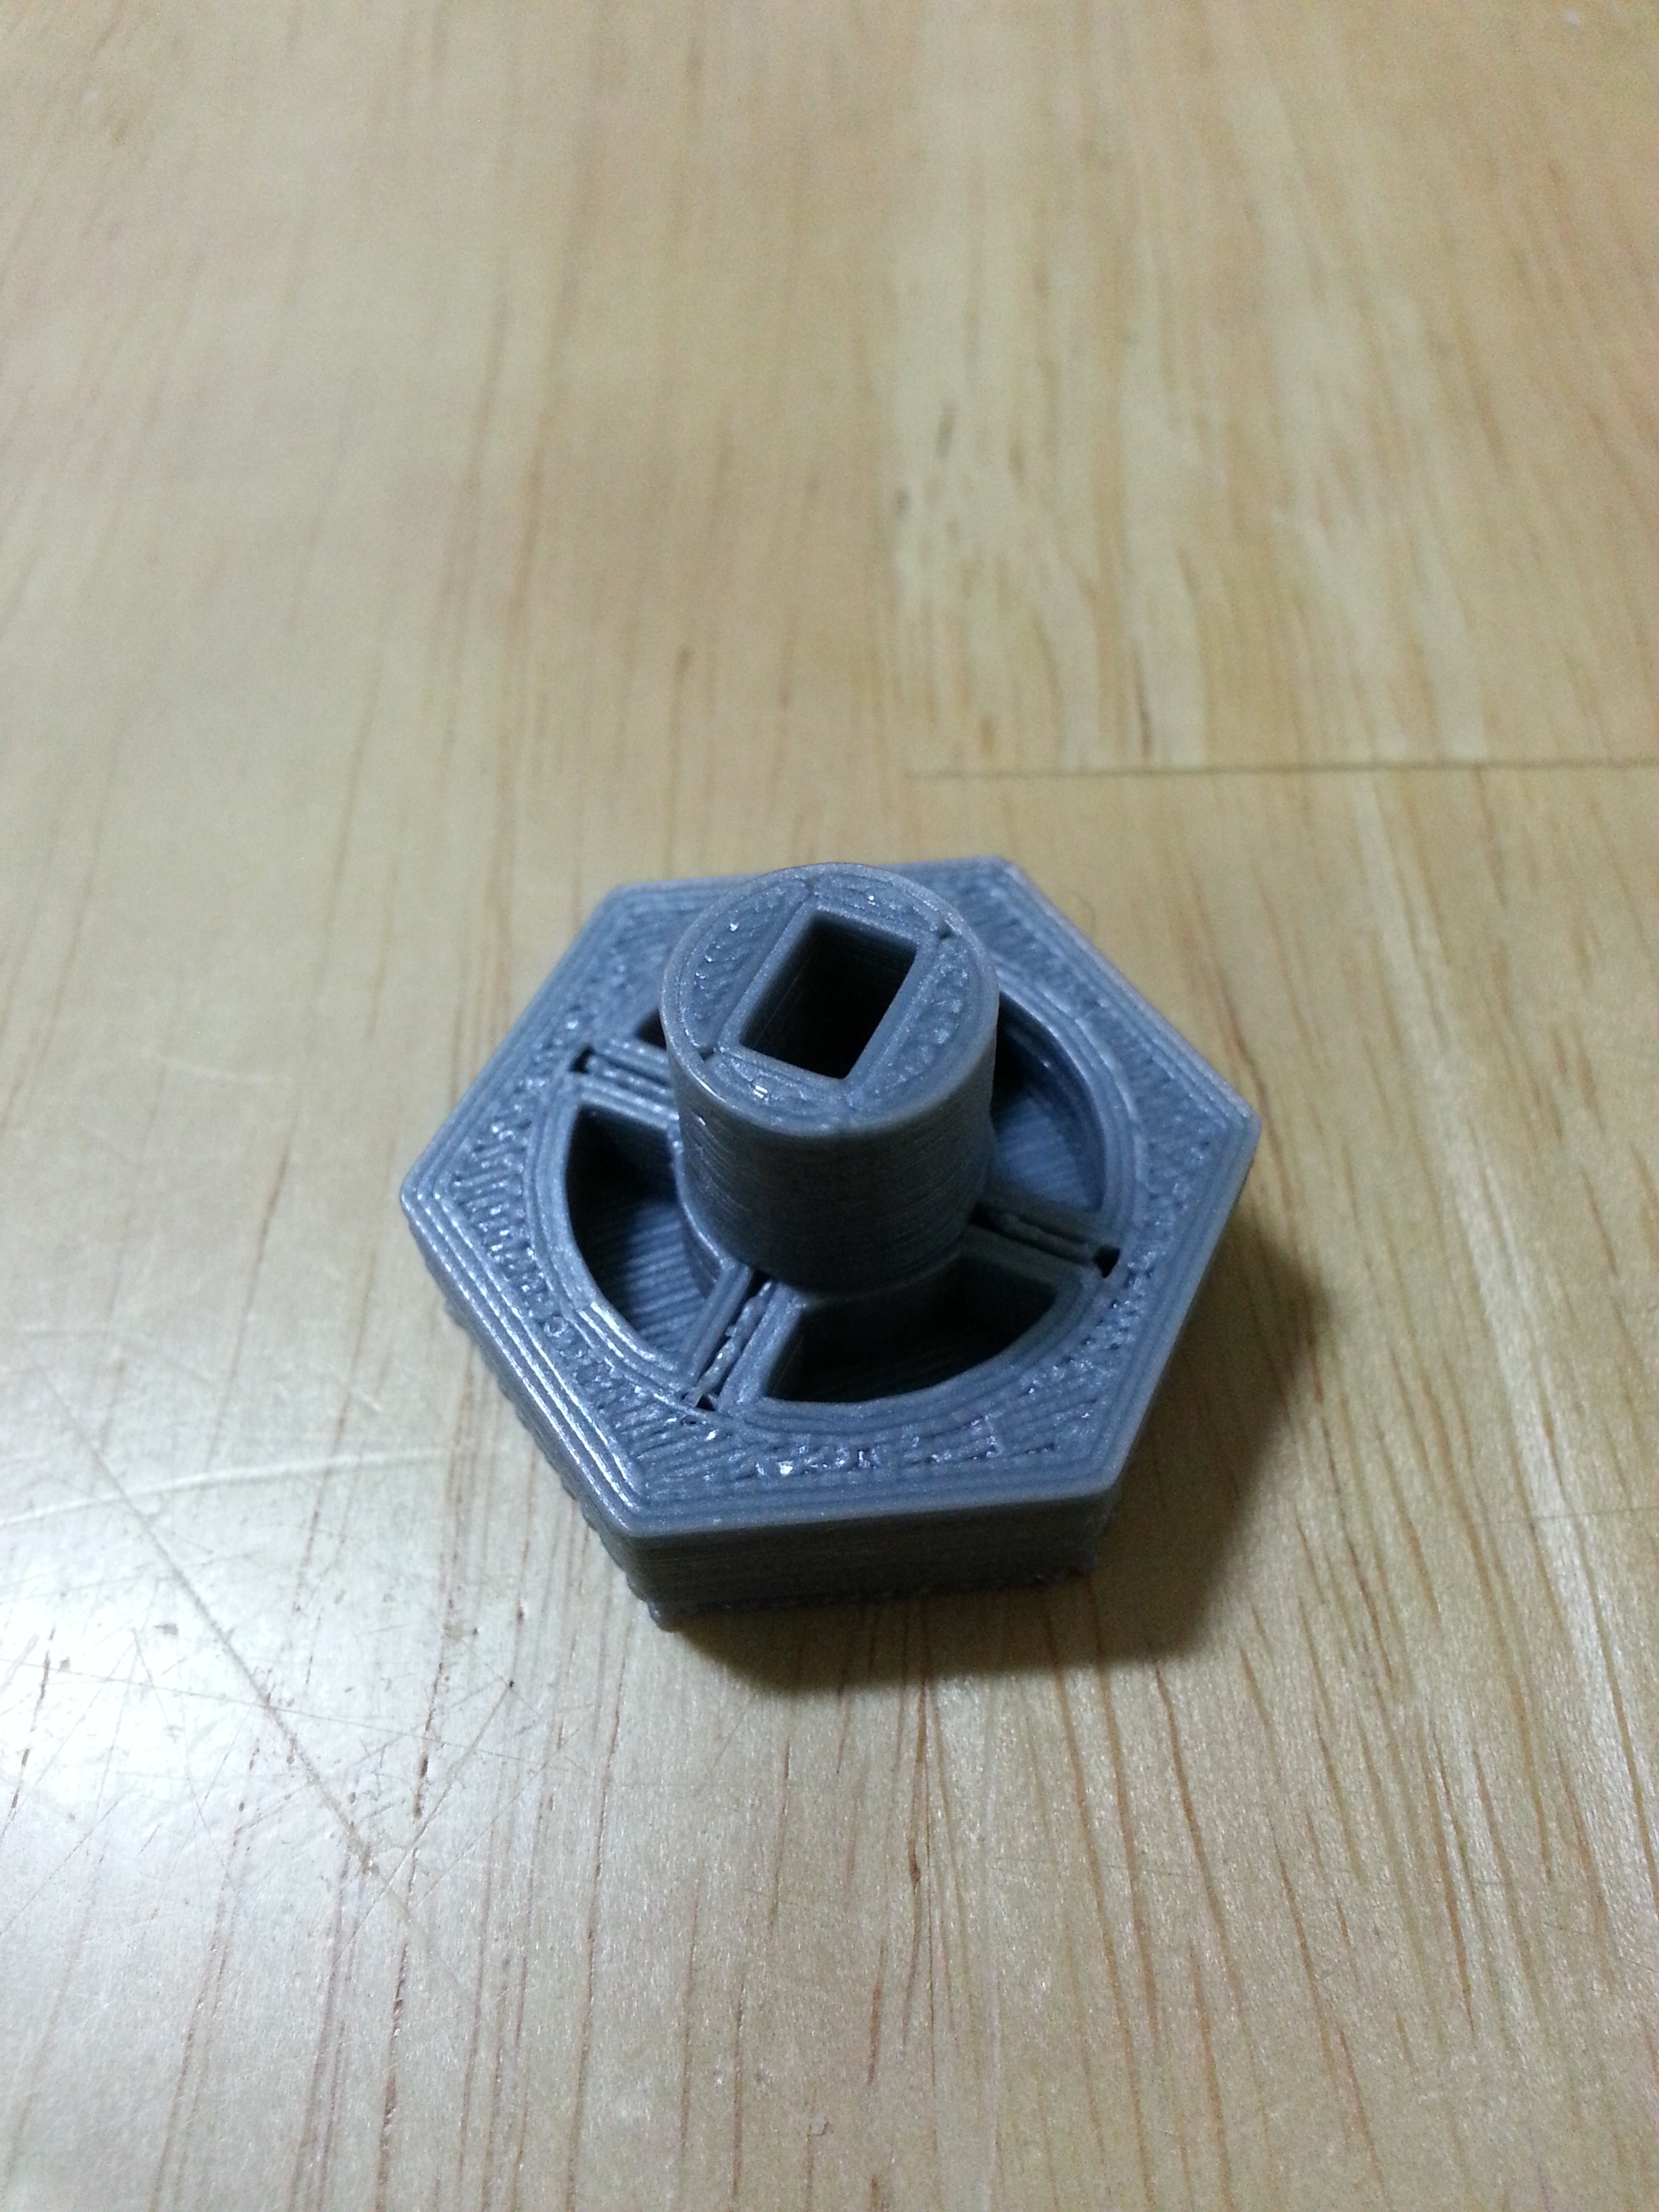 3D-Printed oven knob